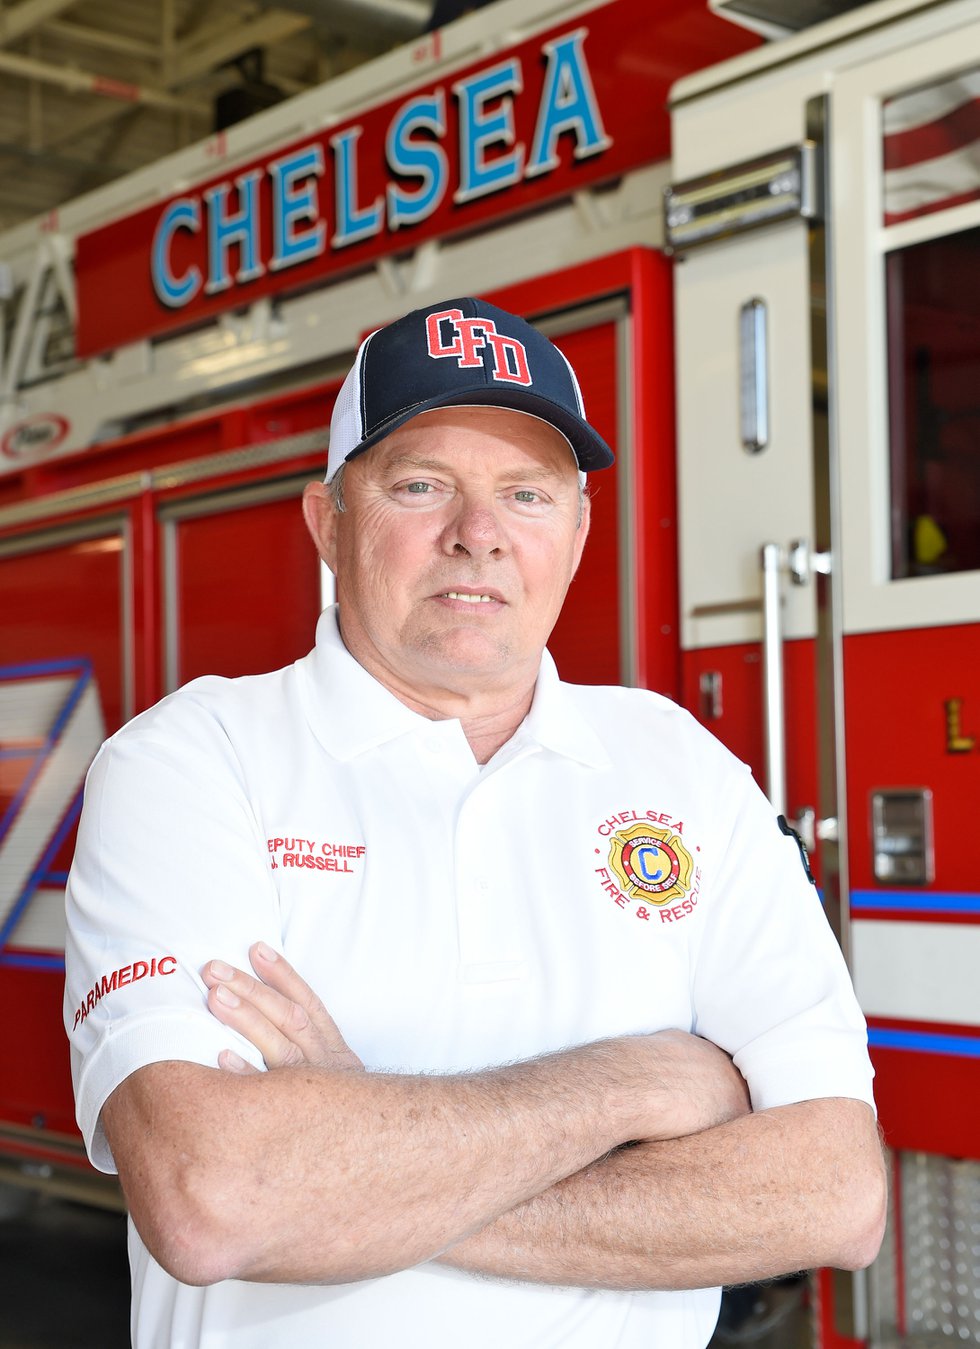 280-CITY-New-Deputy-Fire-Chief-Jeff-Russell.jpg